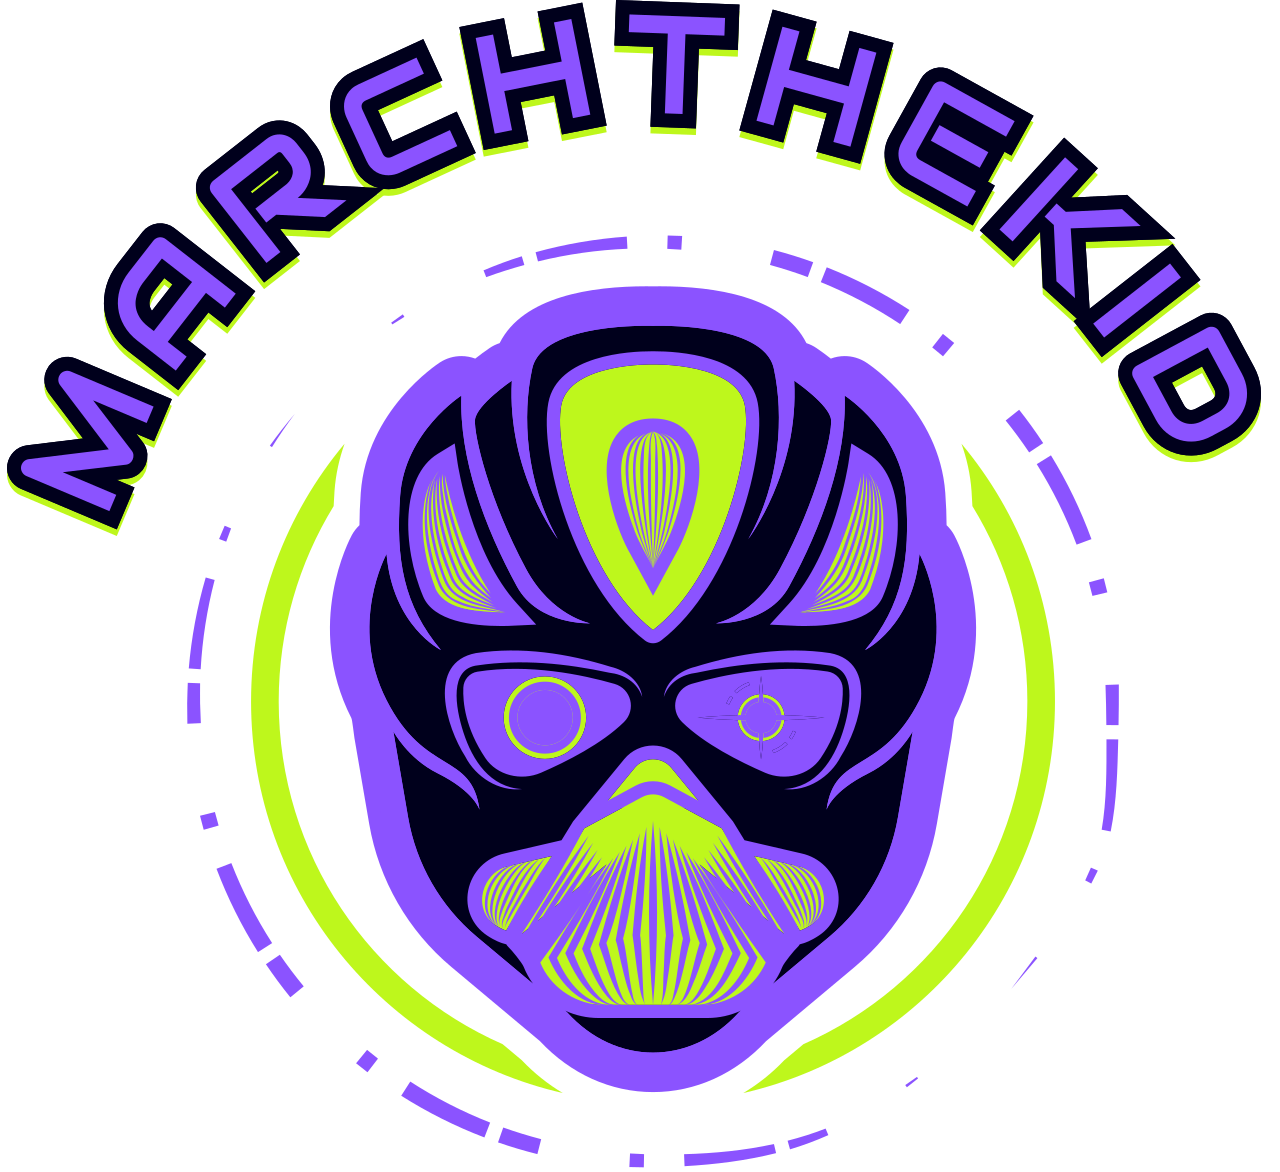 Marchthekid 's logo